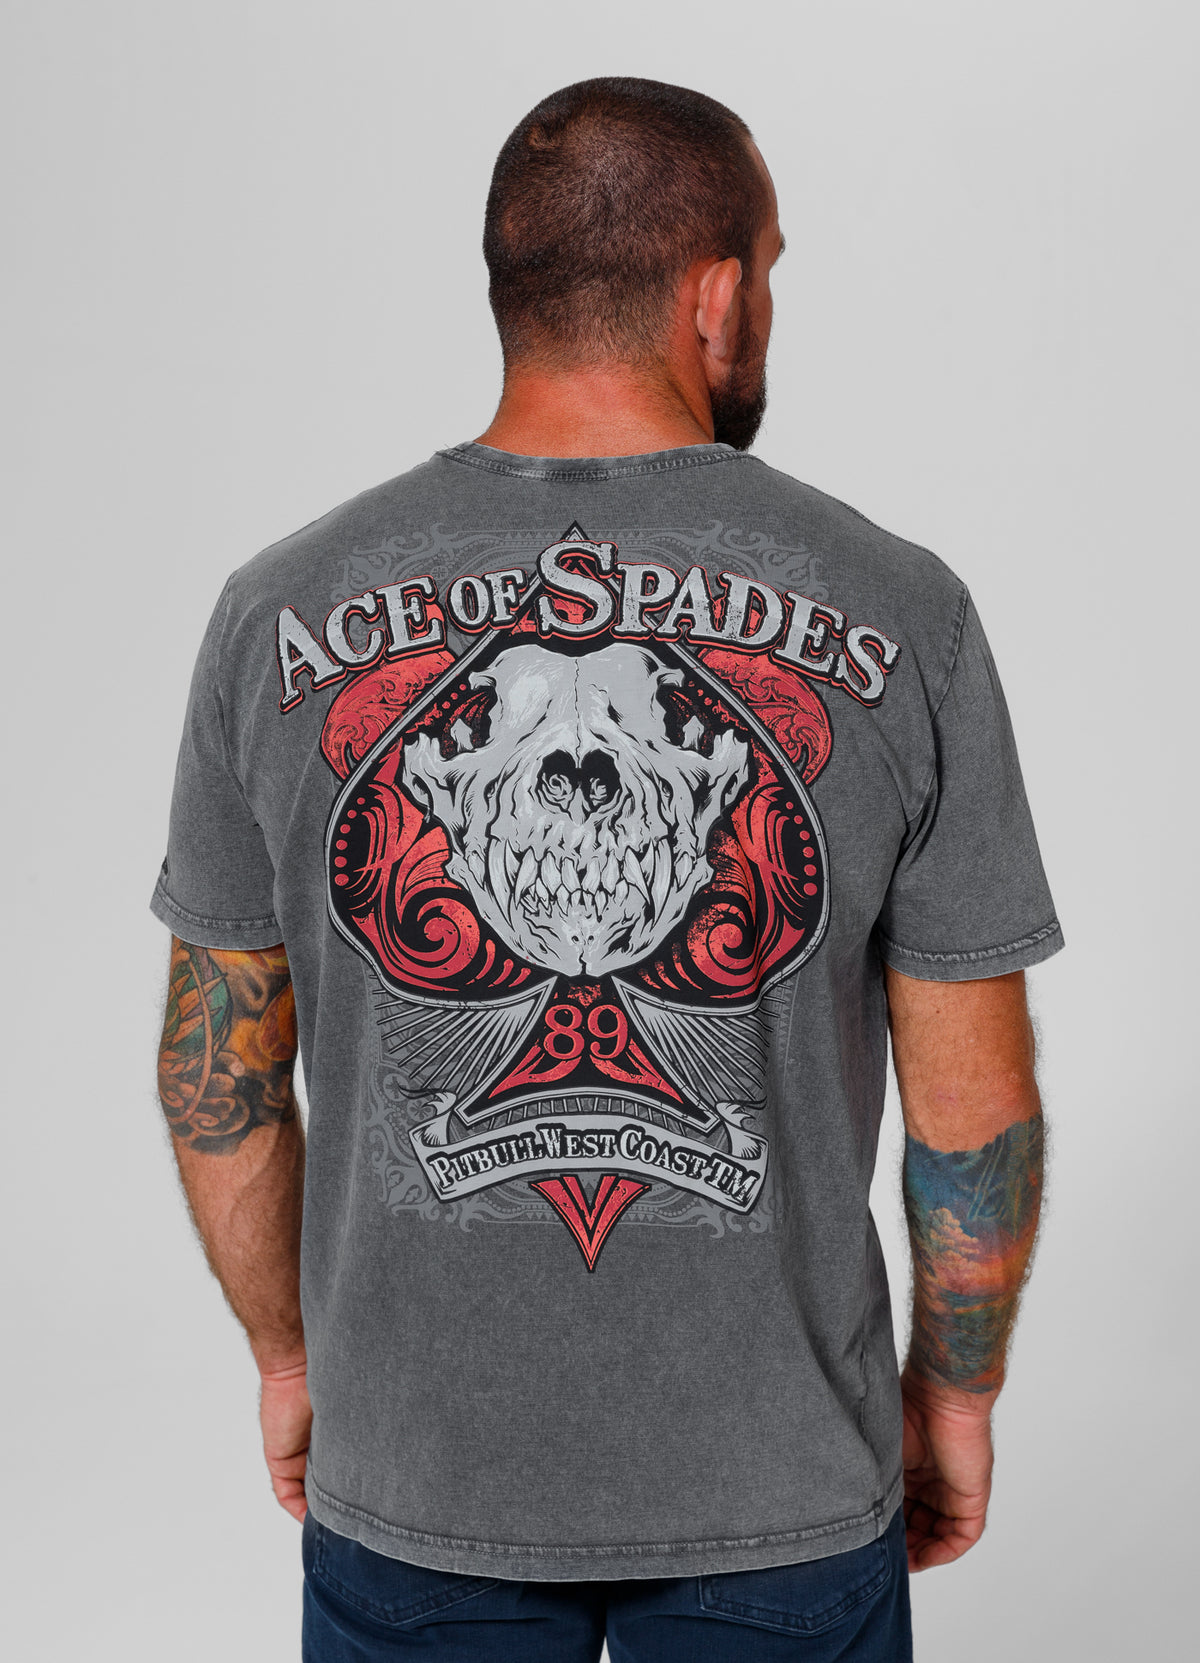 ACE OF SPADES 2 Graphite T-shirt